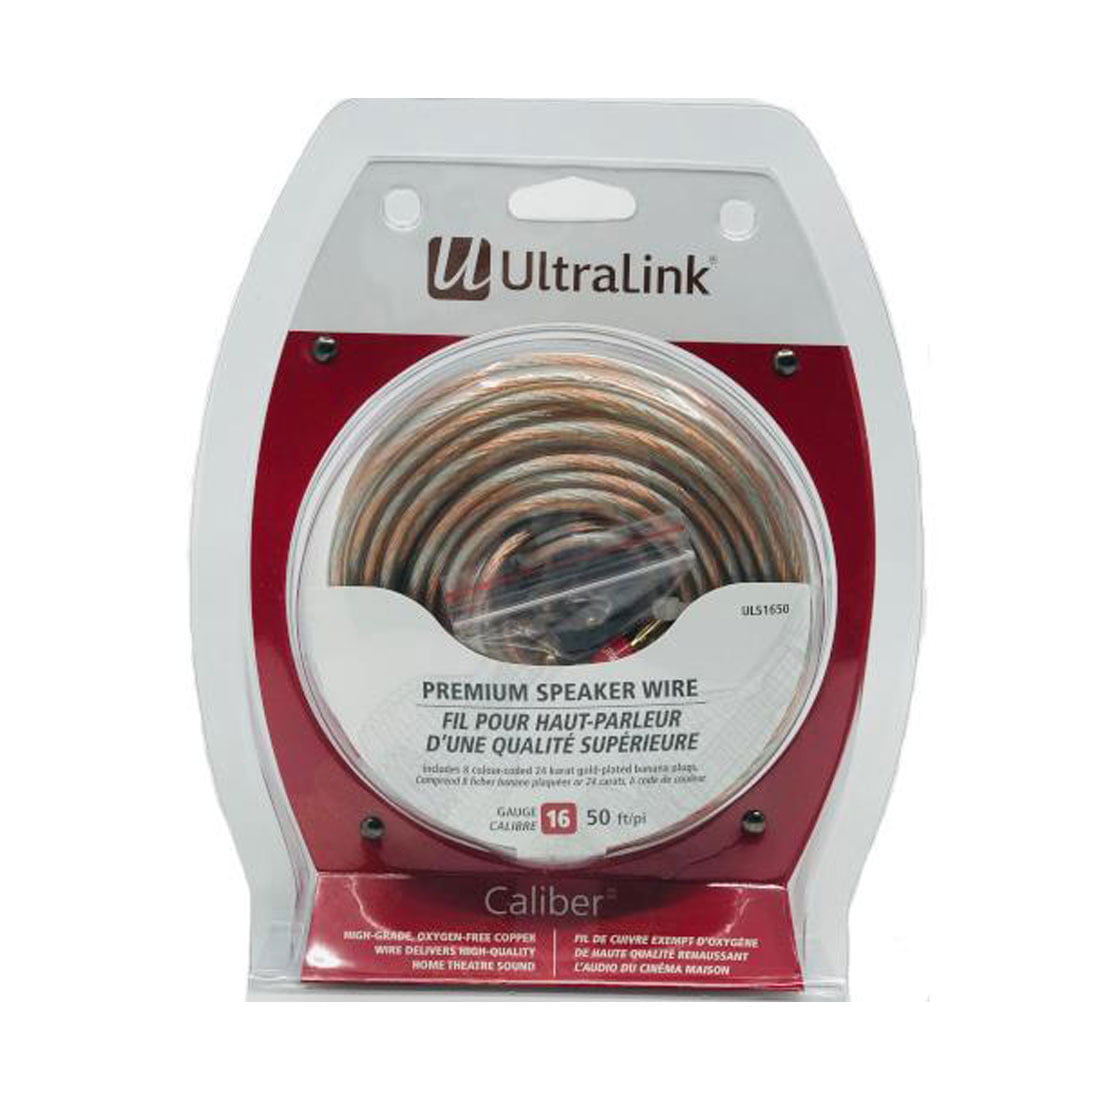 Ultralink Premium Speaker Wire (16 Gauge - 50 Feet)